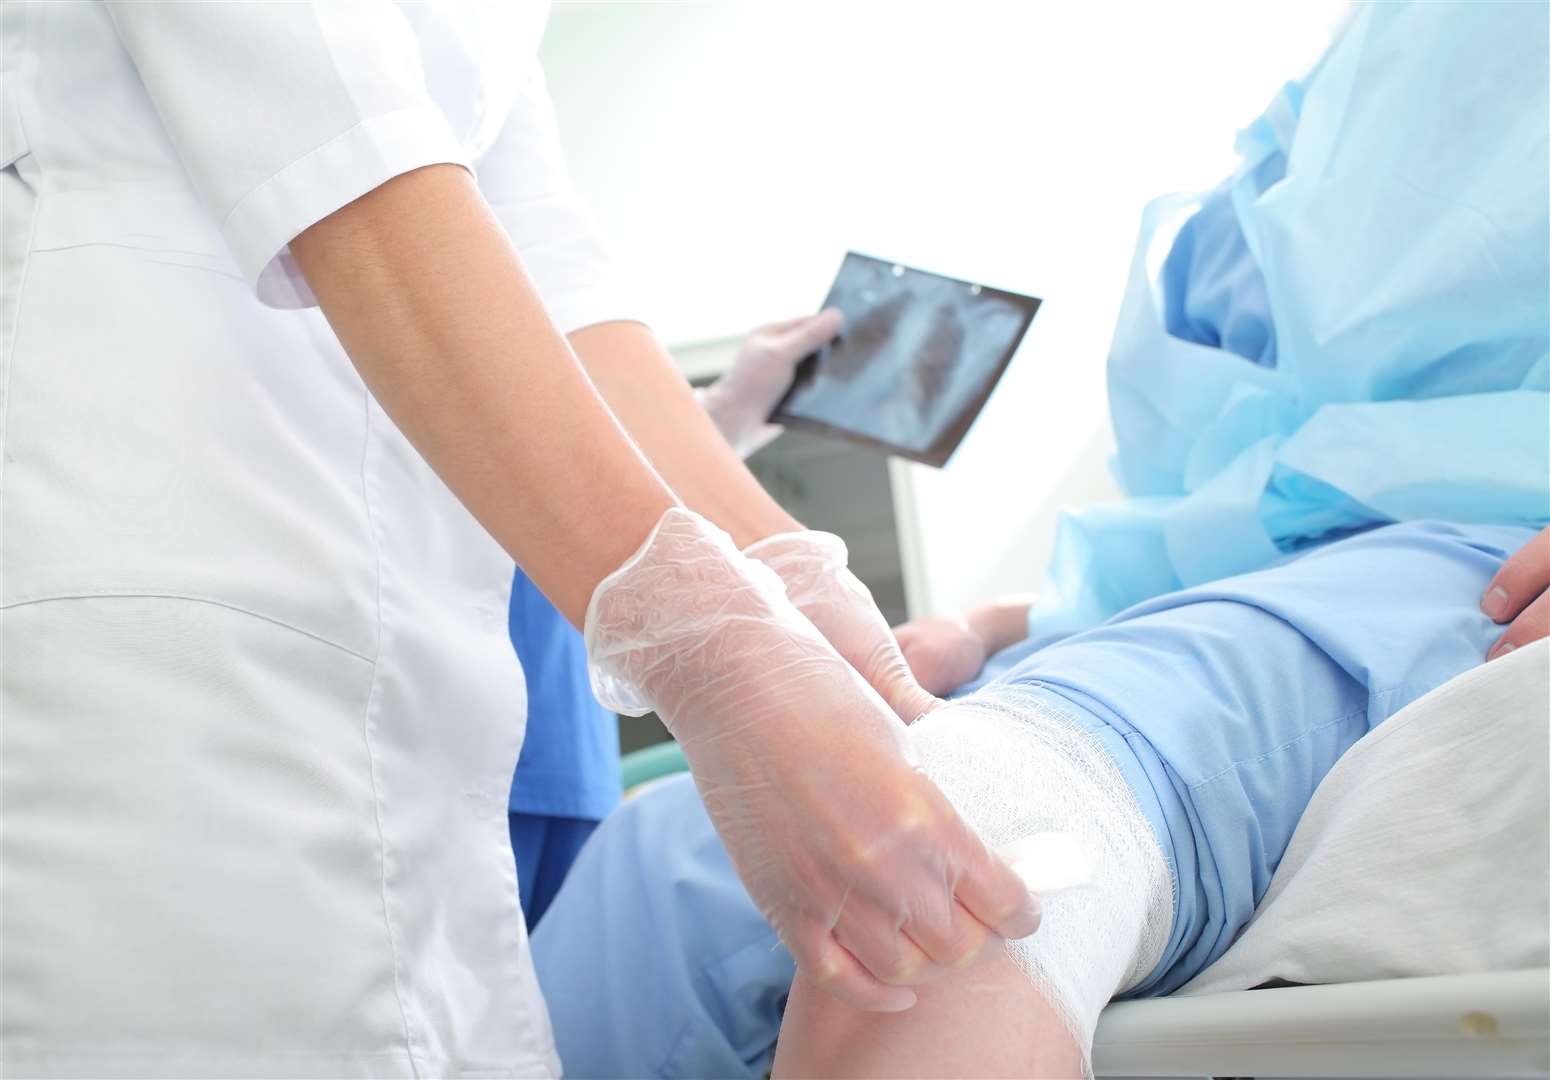 Nurse bandaging a patient in an emergency room